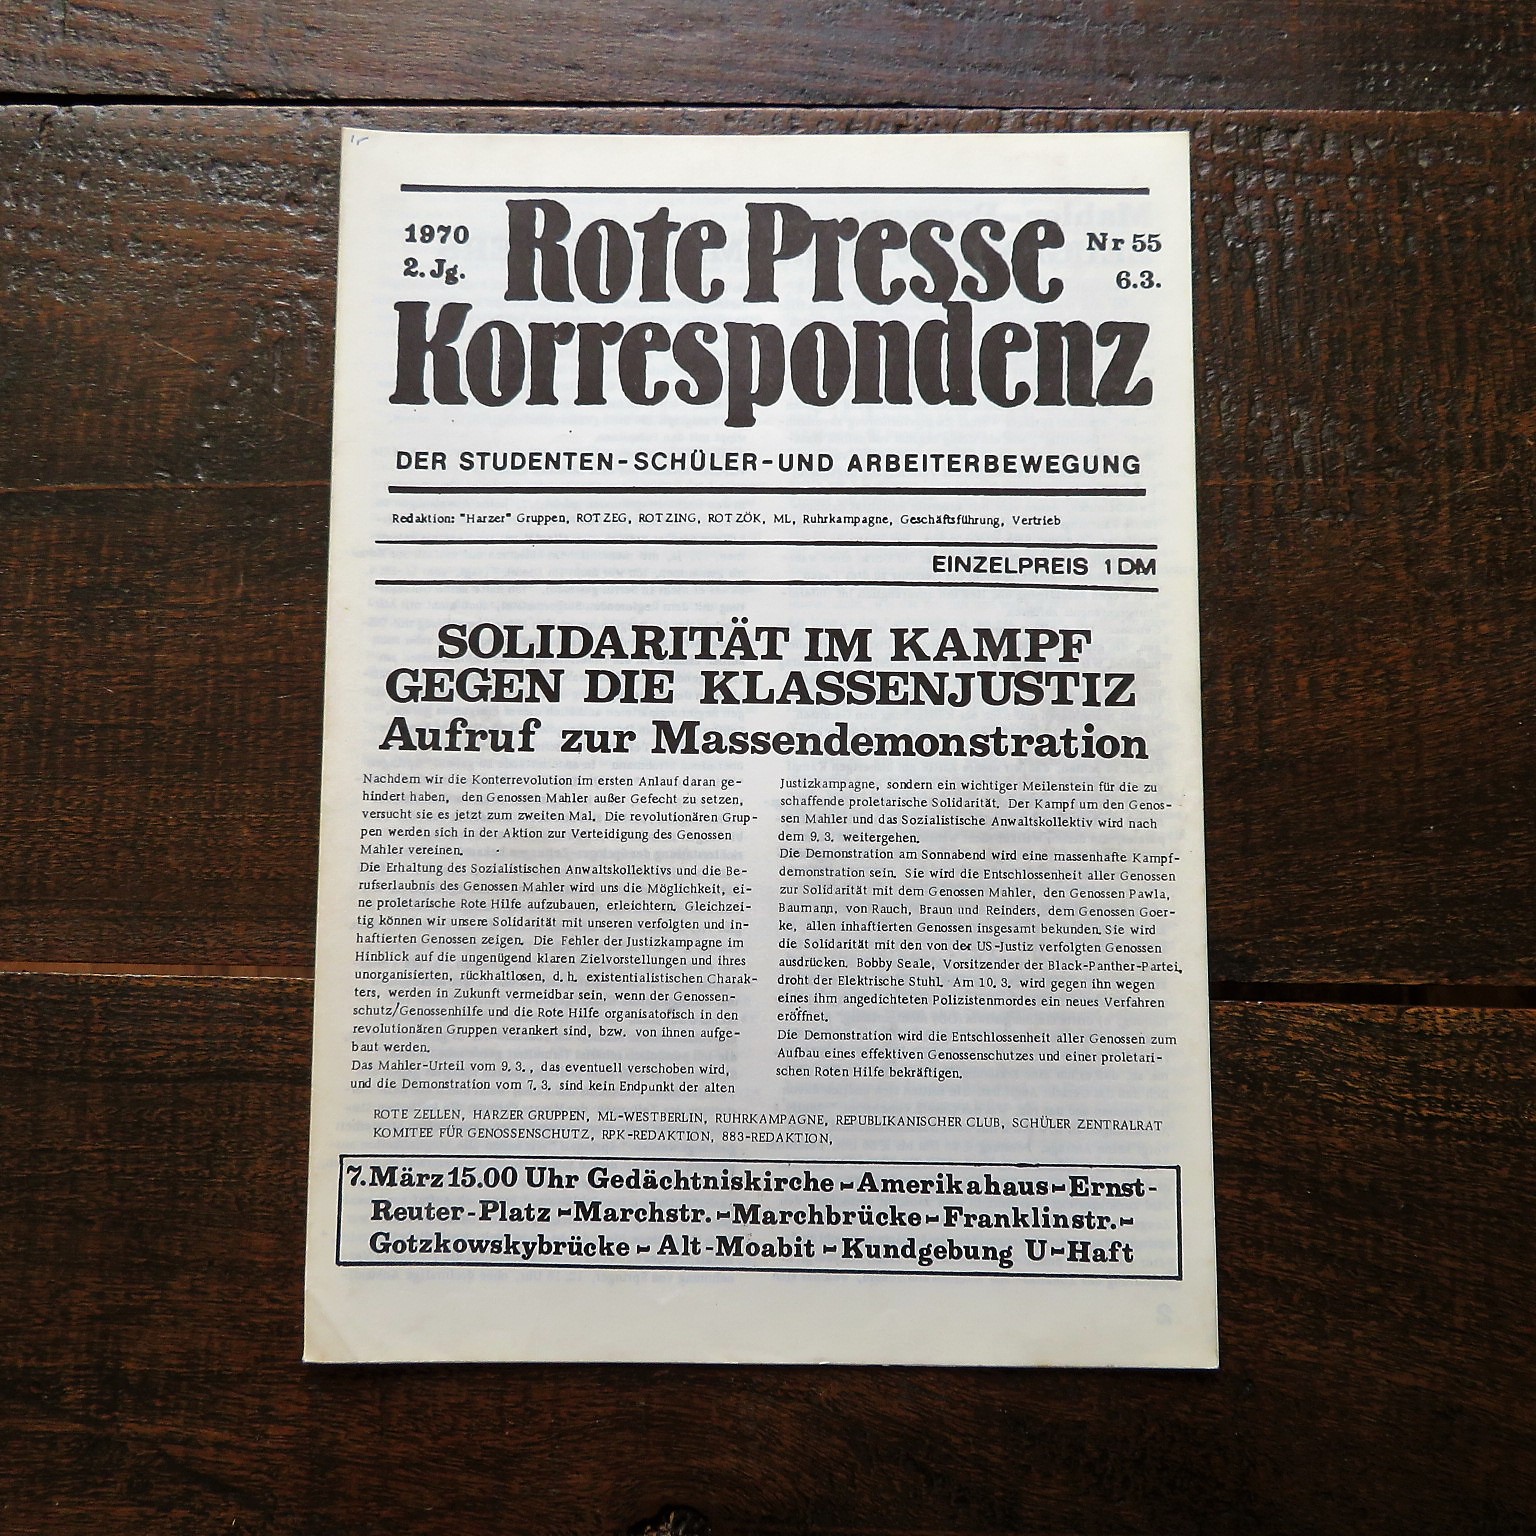 rote-presse-korrespondenz-magazine-1-33